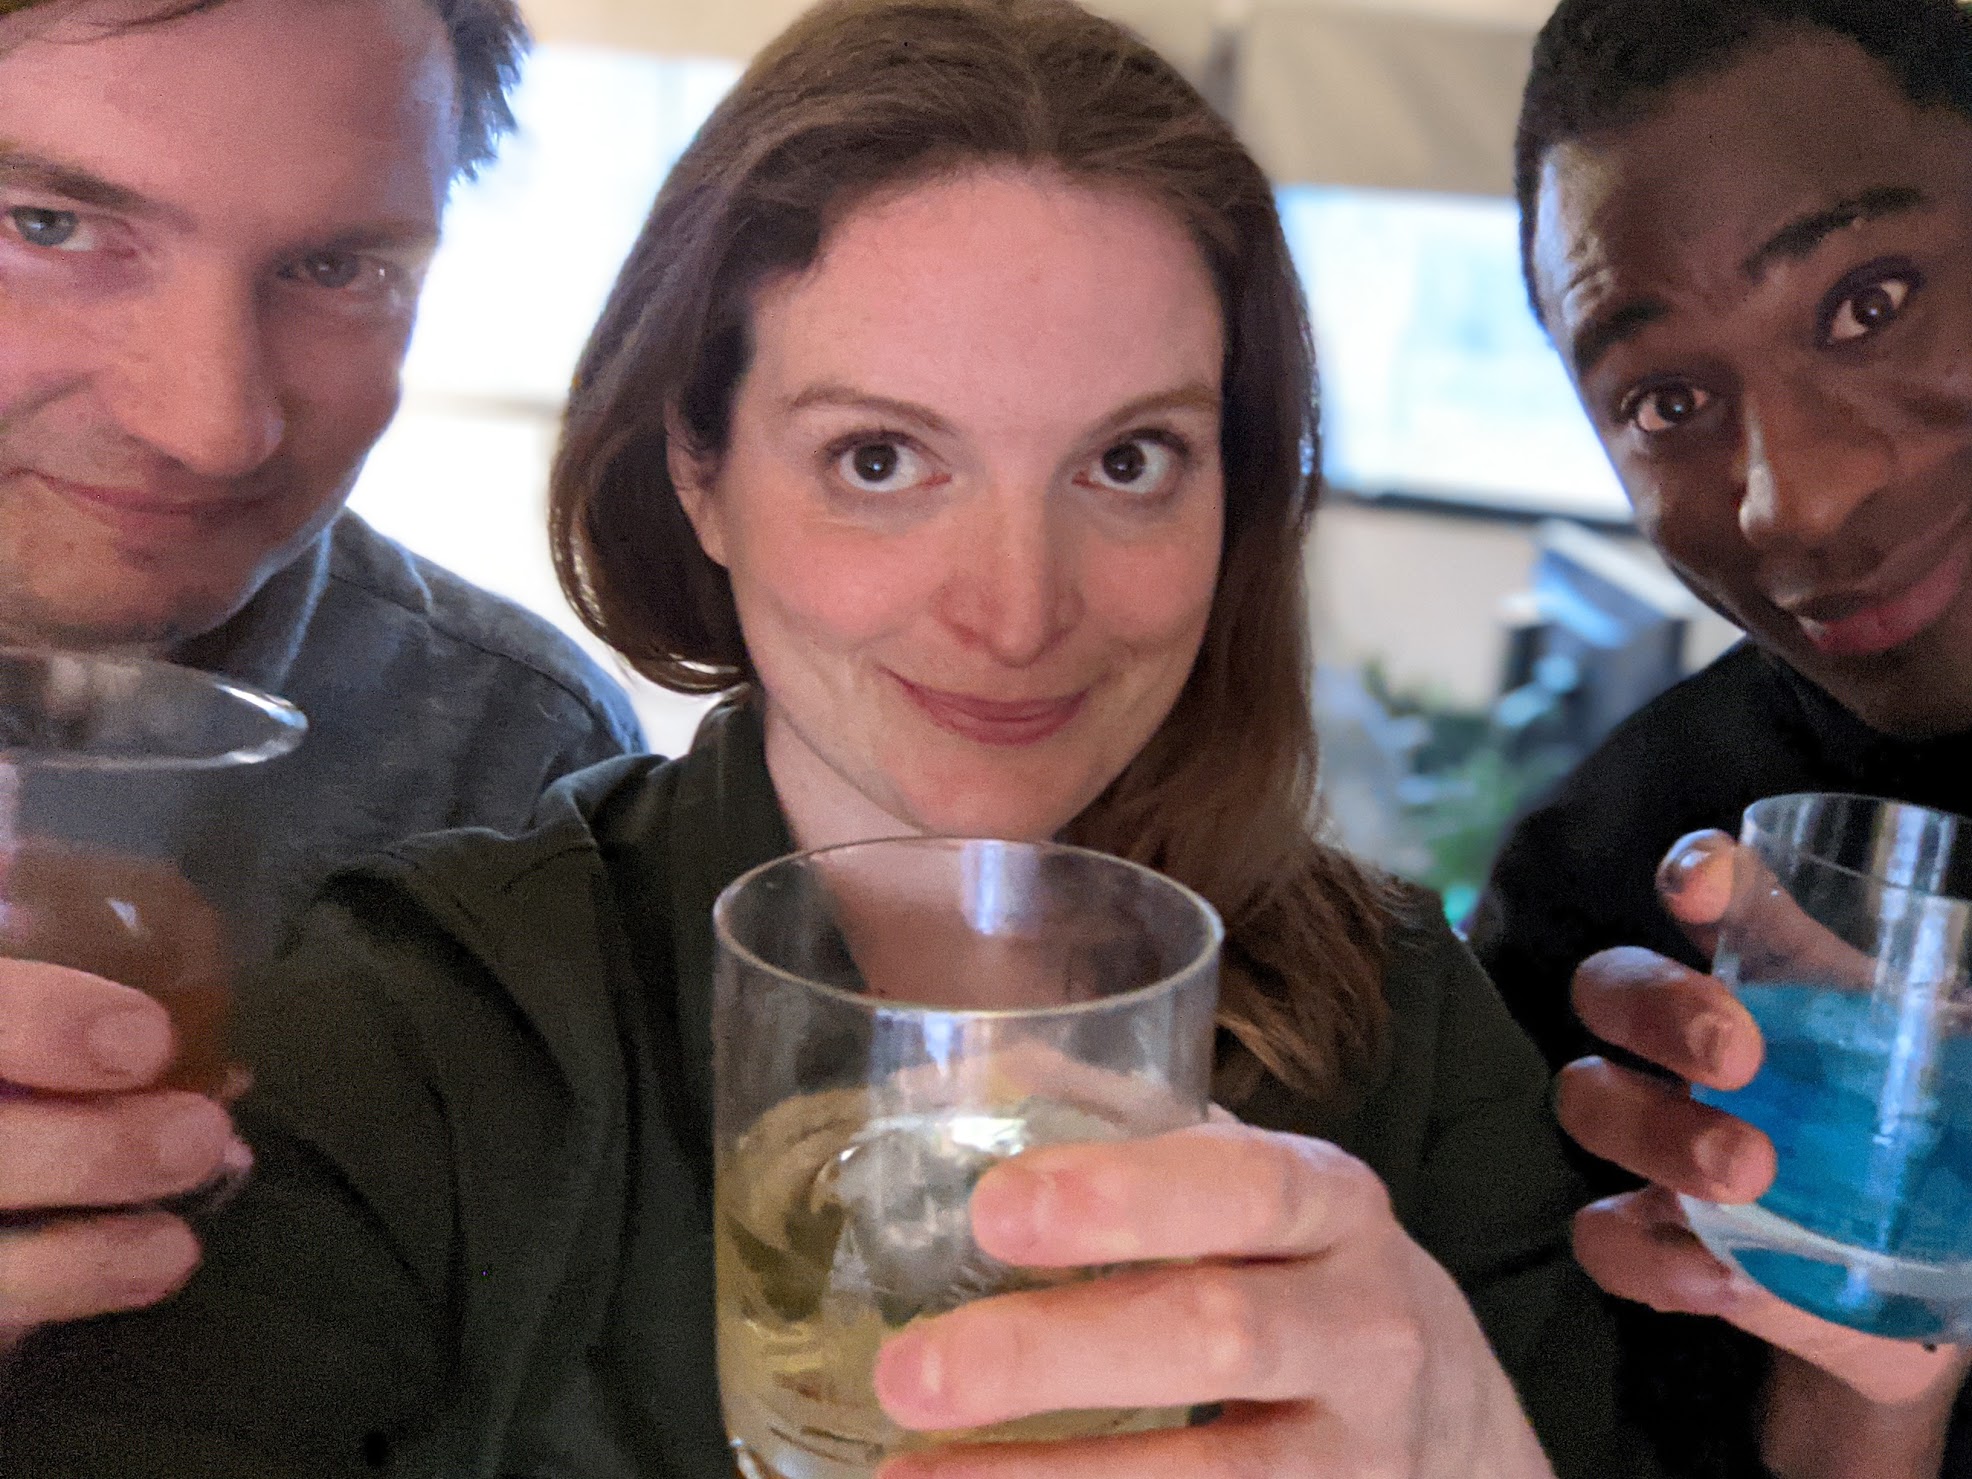 three people holding drinks